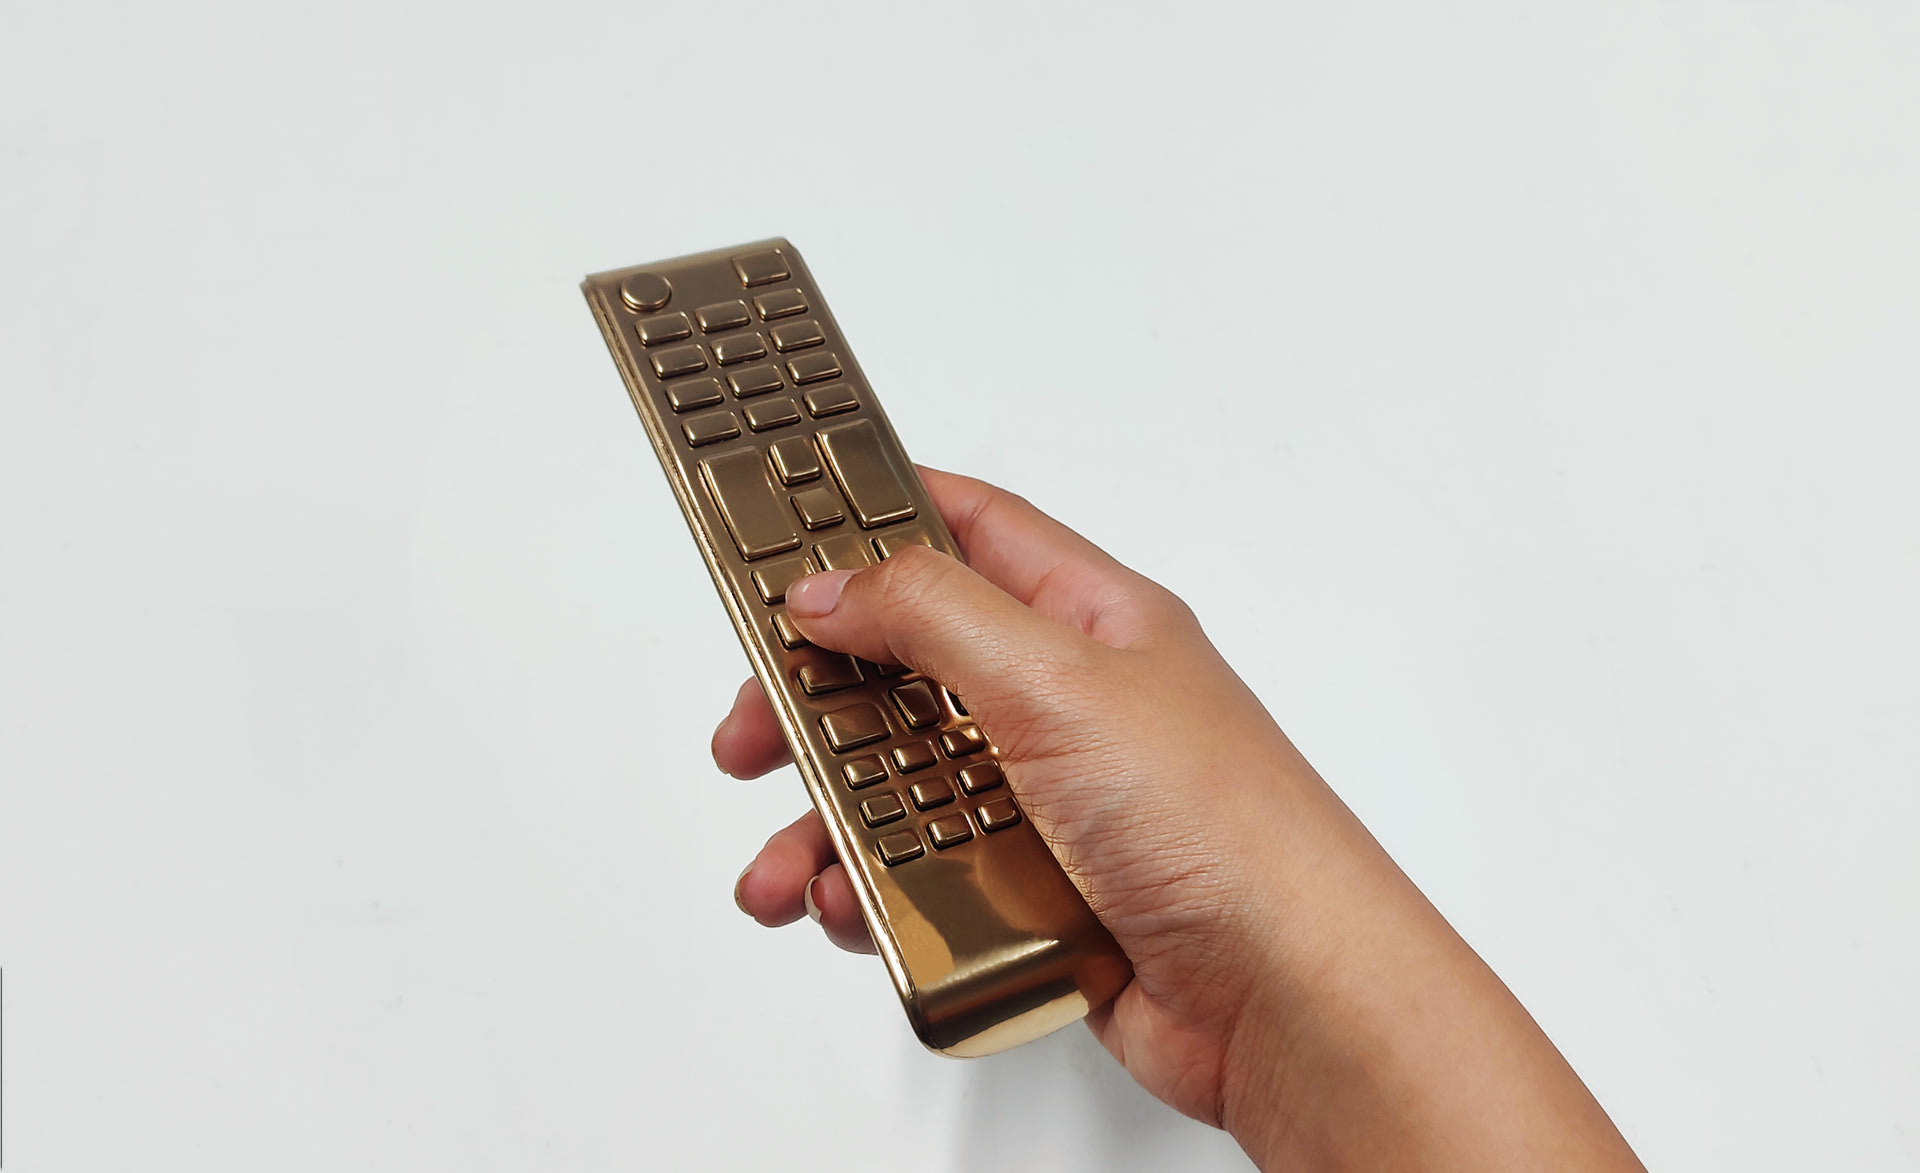 A golden remote control 